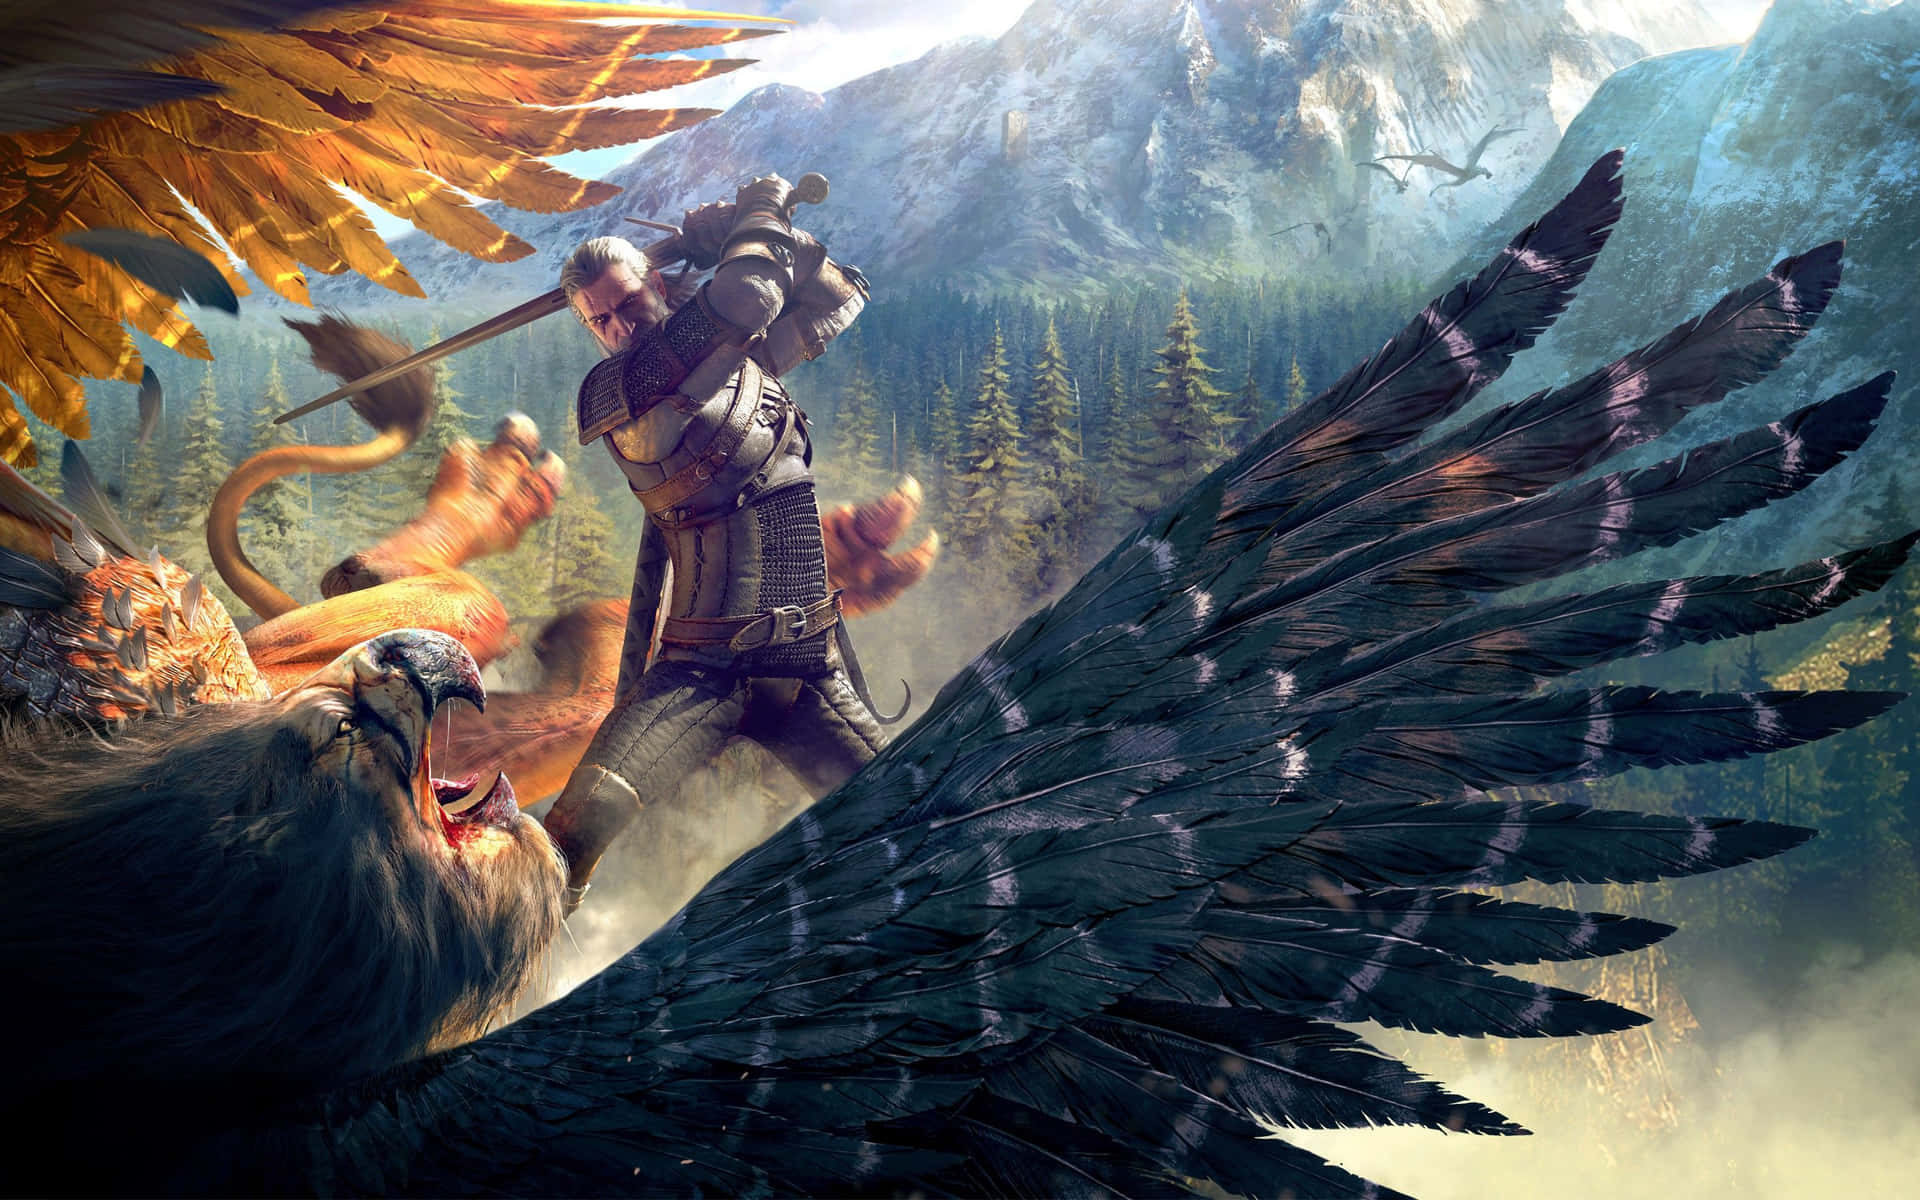 ¡sumérgeteen El Impresionante Mundo De Witcher 3 Con Este Increíble Fondo De Pantalla Para Tu Escritorio! Fondo de pantalla